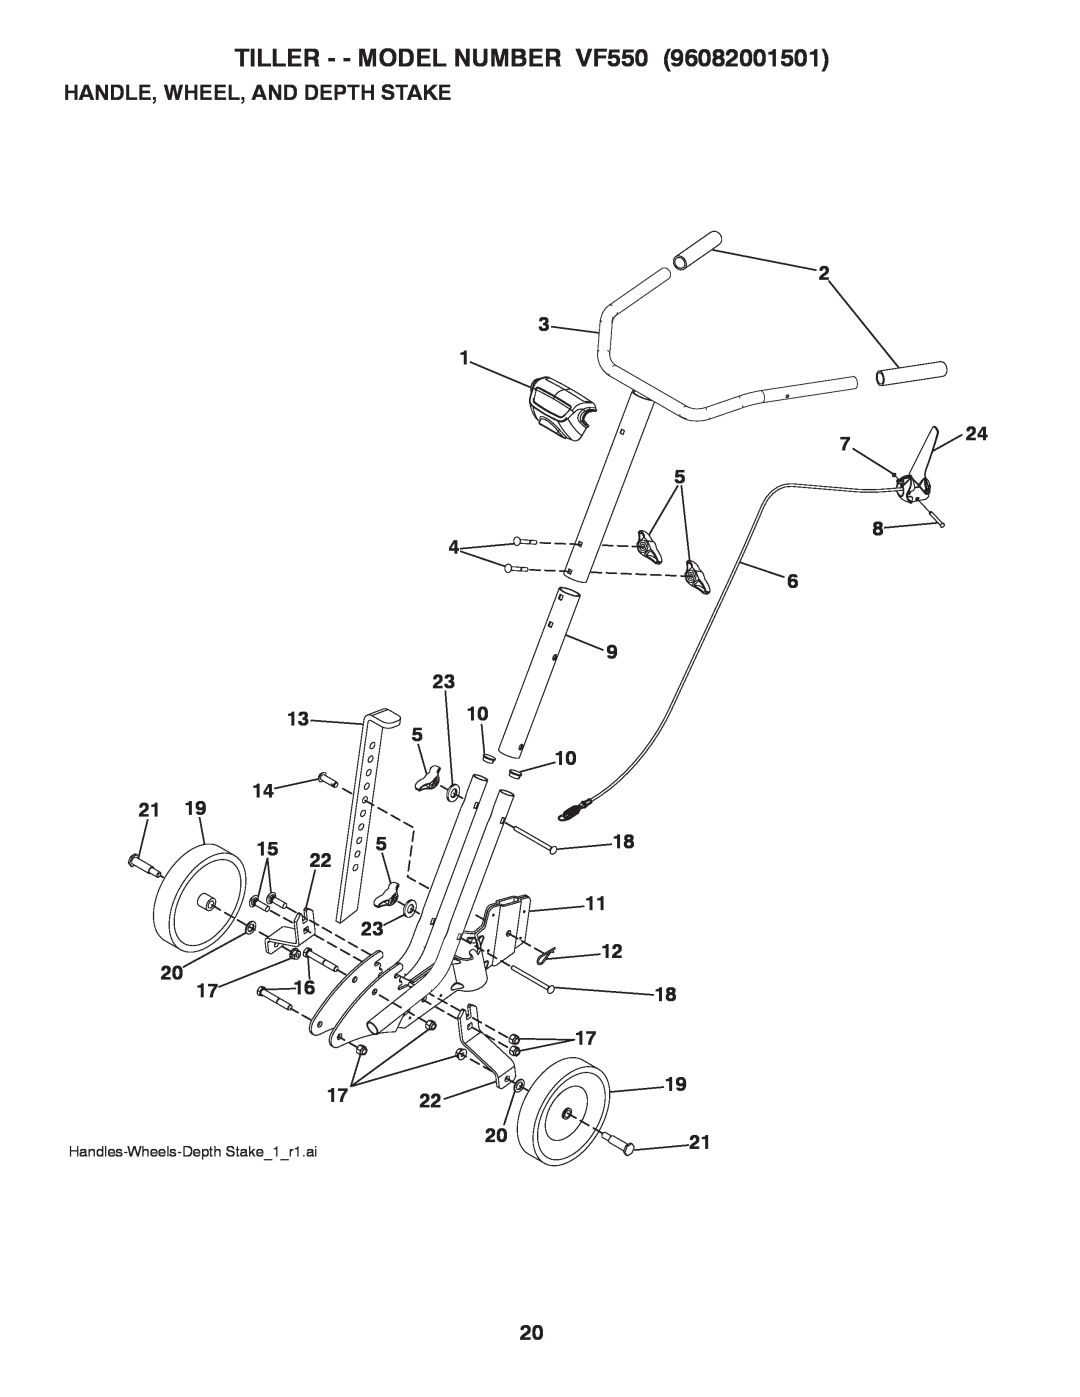 Poulan manual Handle, Wheel, And Depth Stake, TILLER - - MODEL NUMBER VF550, Handles-Wheels-DepthStake 1 r1.ai 